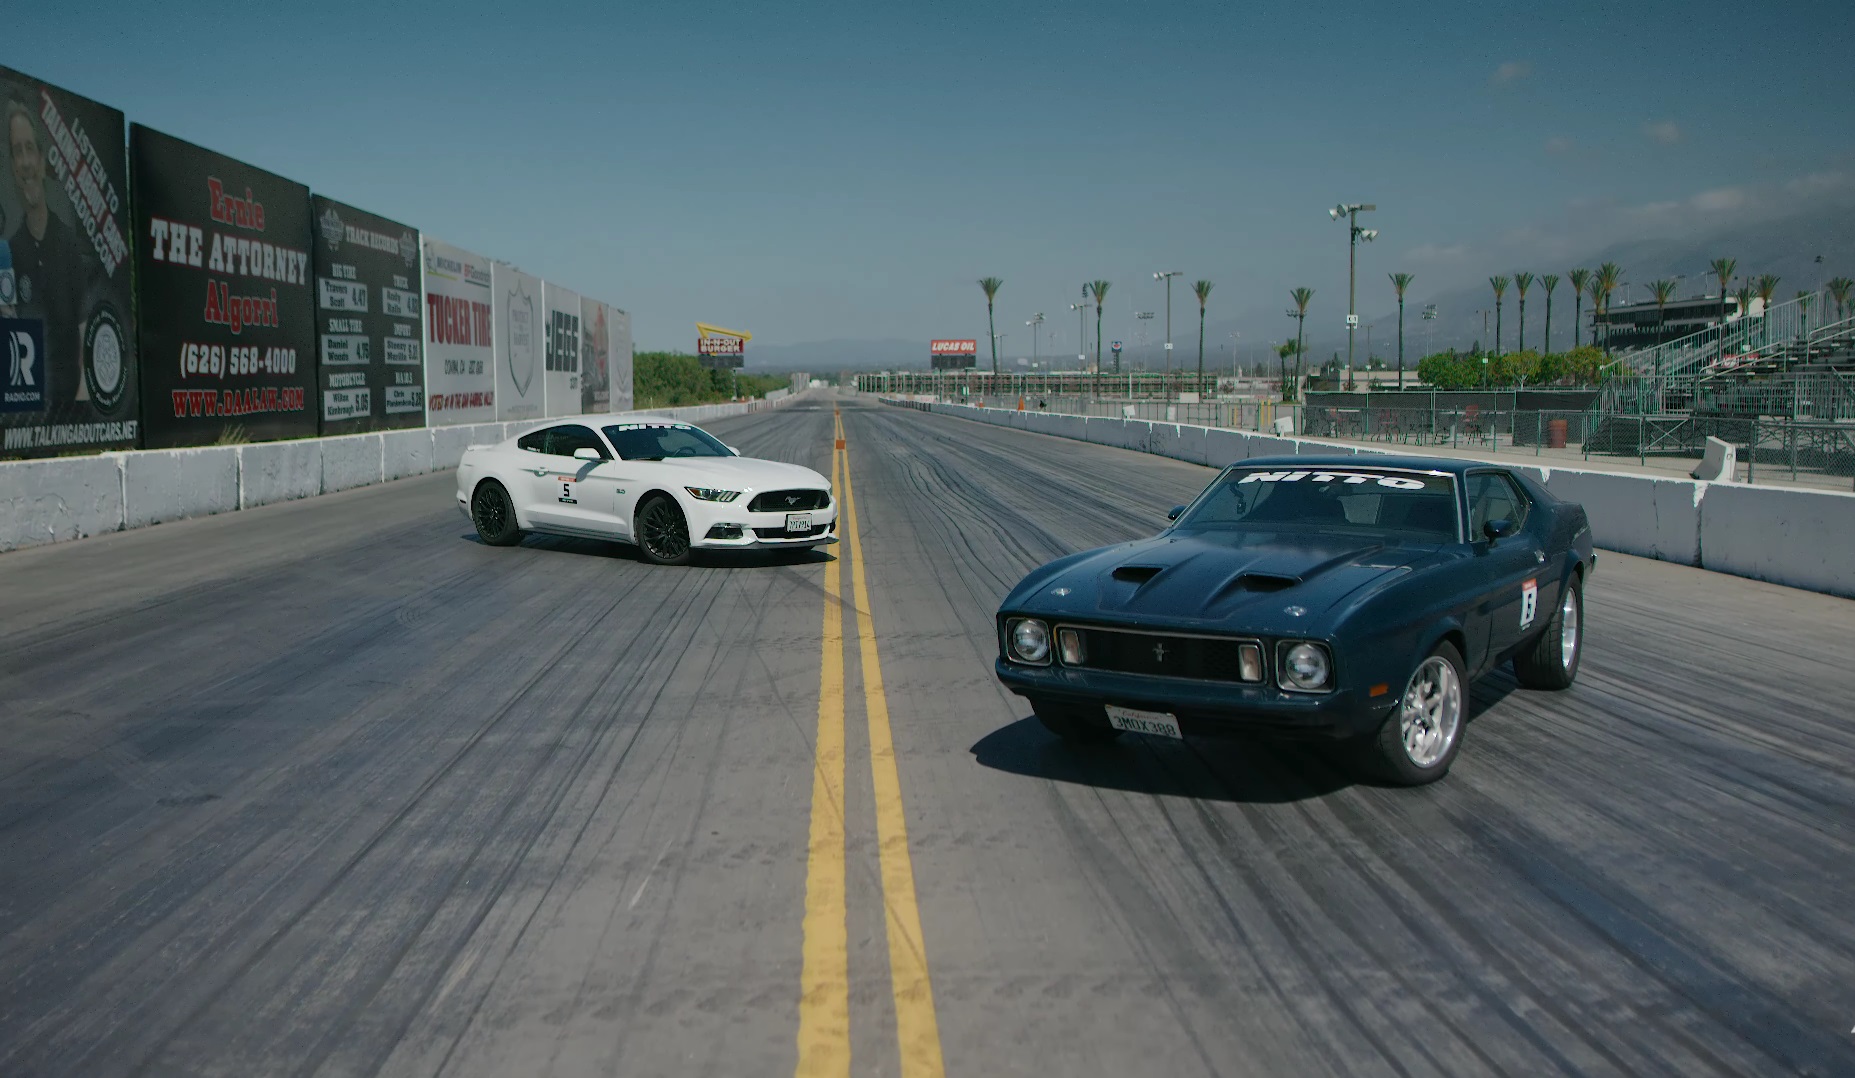 Video: 1973 Mustang Mach 1 vs 2016 Mustang GT Drag Race